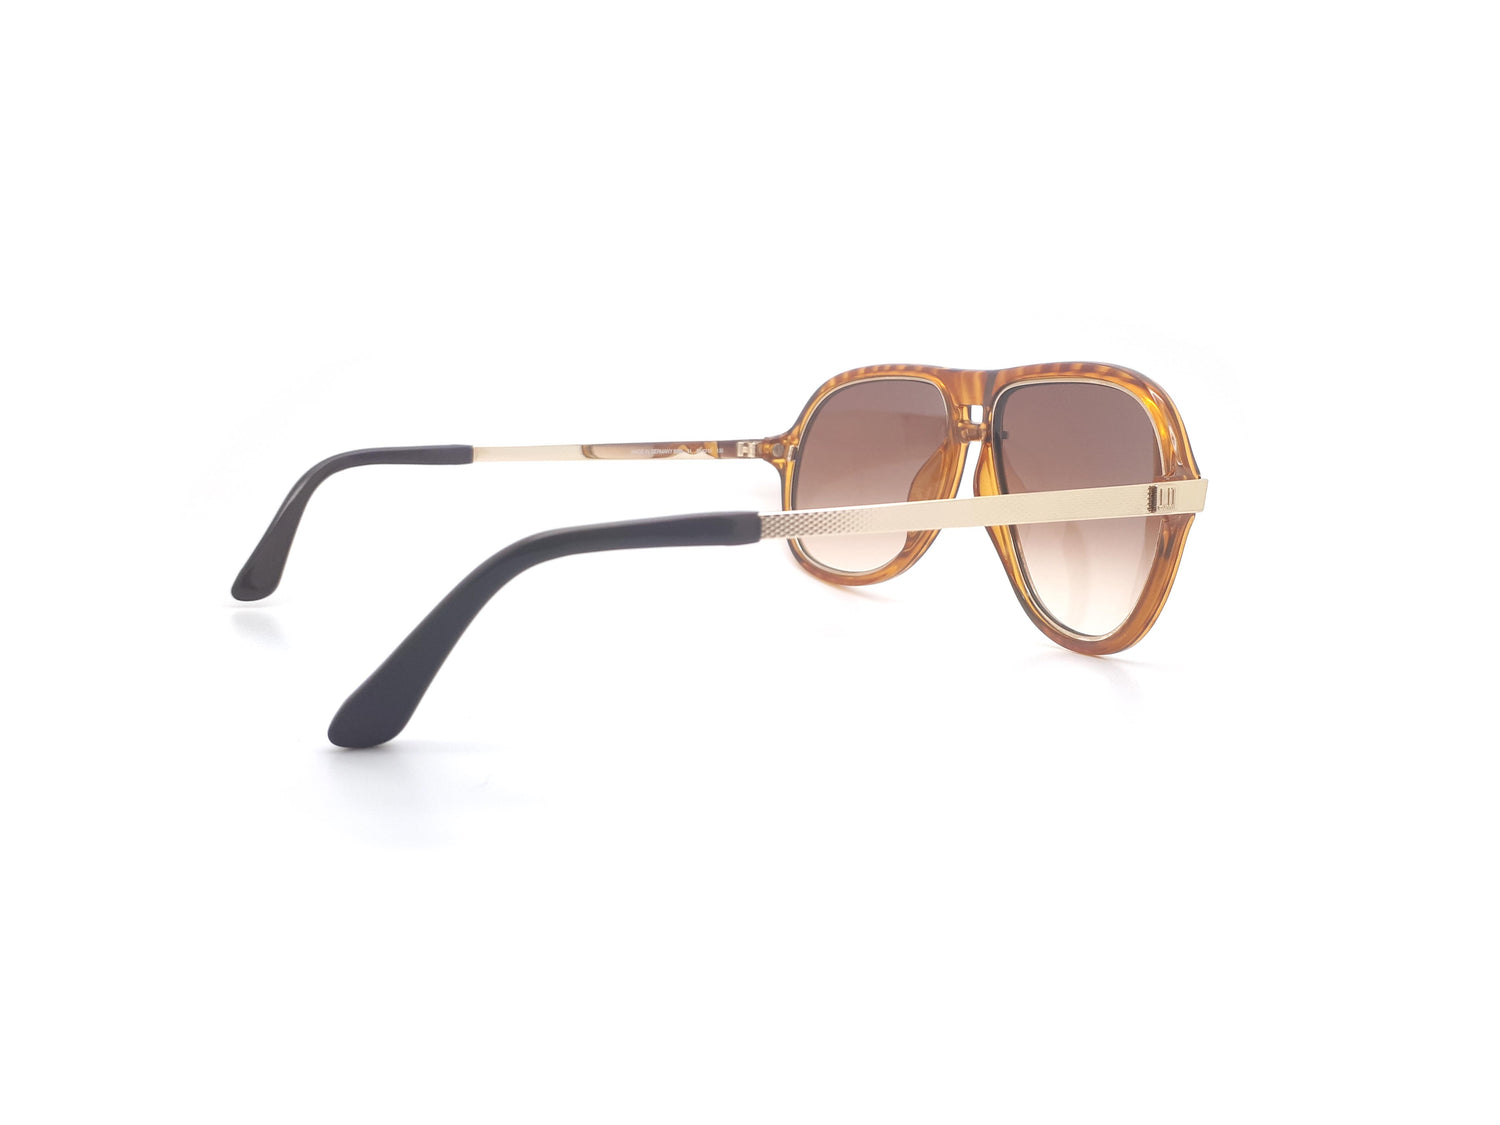 Alfred Dunhill 6183 Original Vintage Sunglasses 80's NOS 